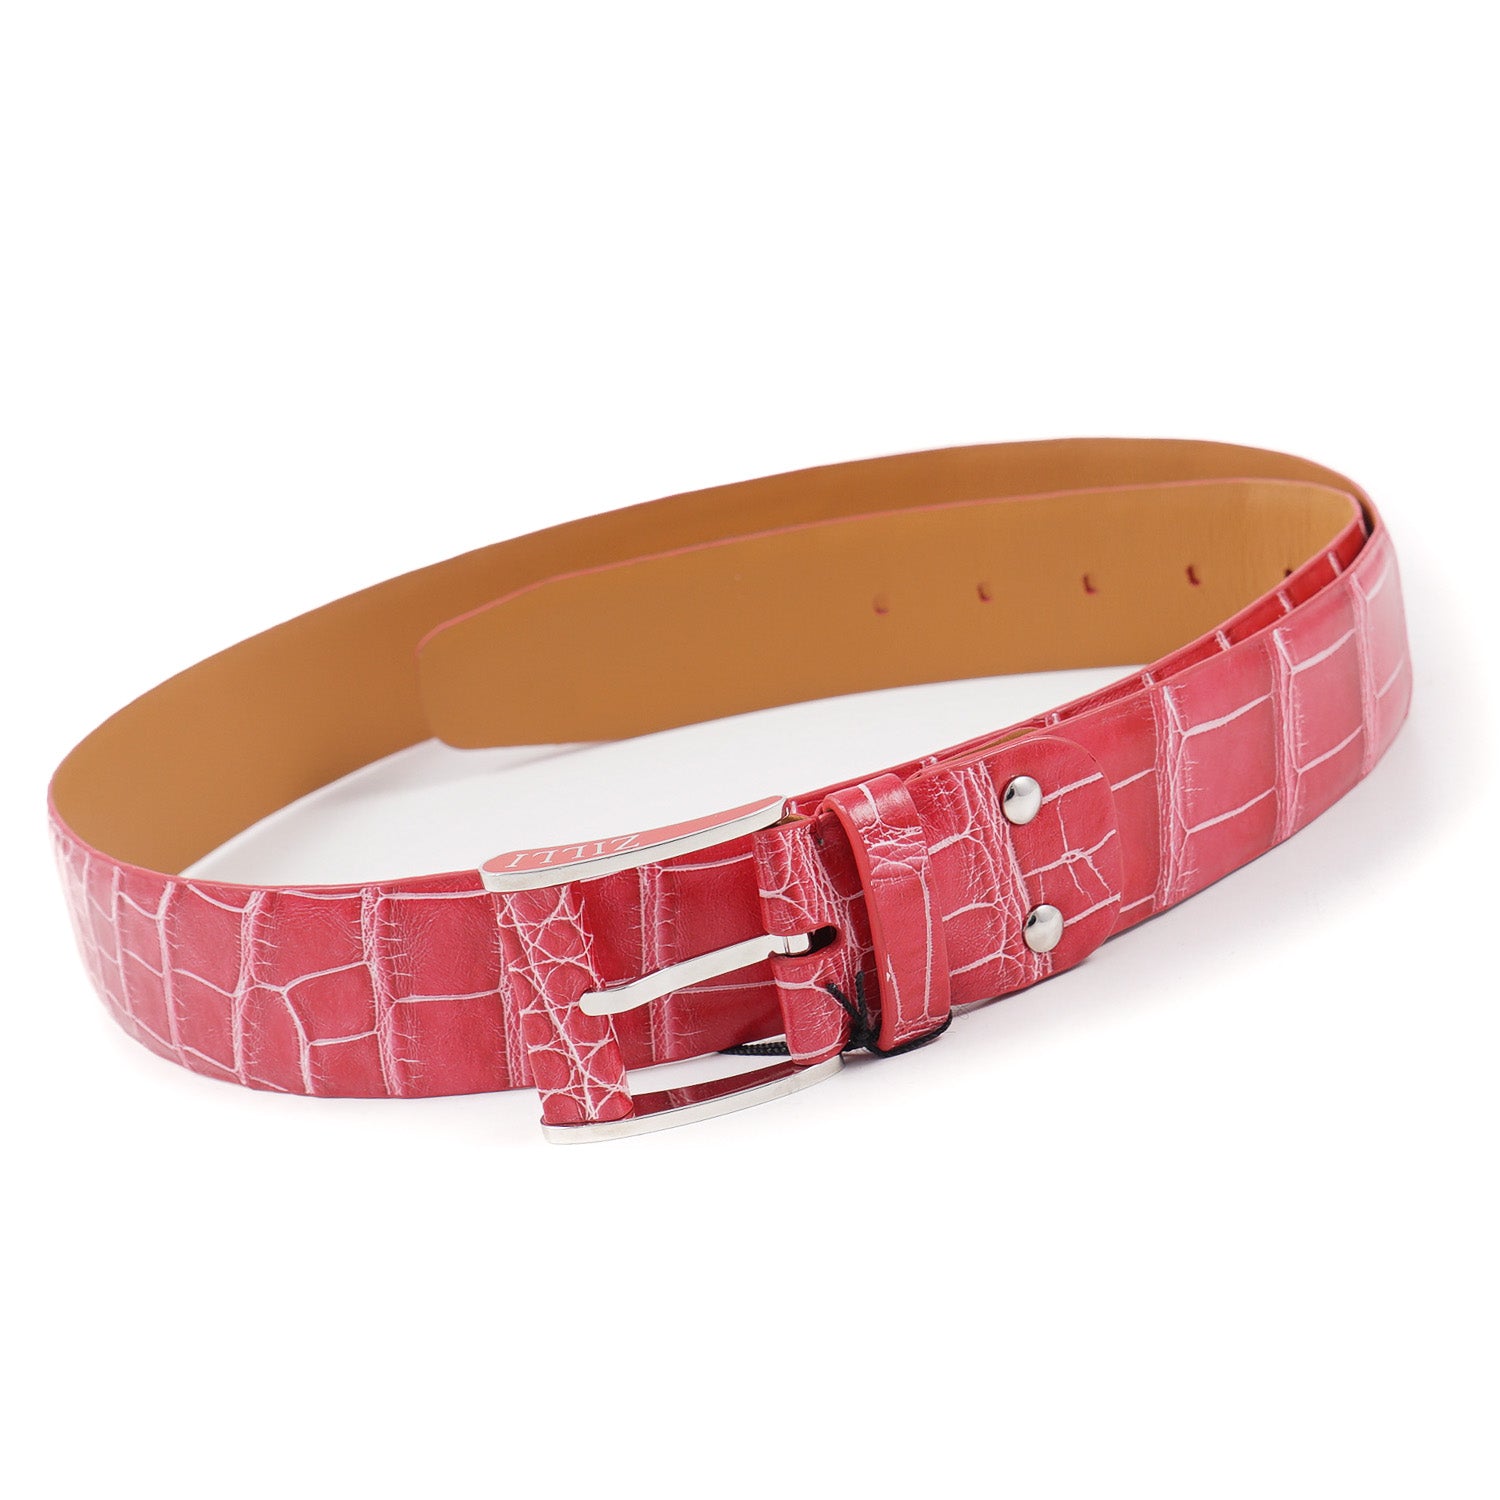 Zilli Belt in Pink Crocodile - Top Shelf Apparel